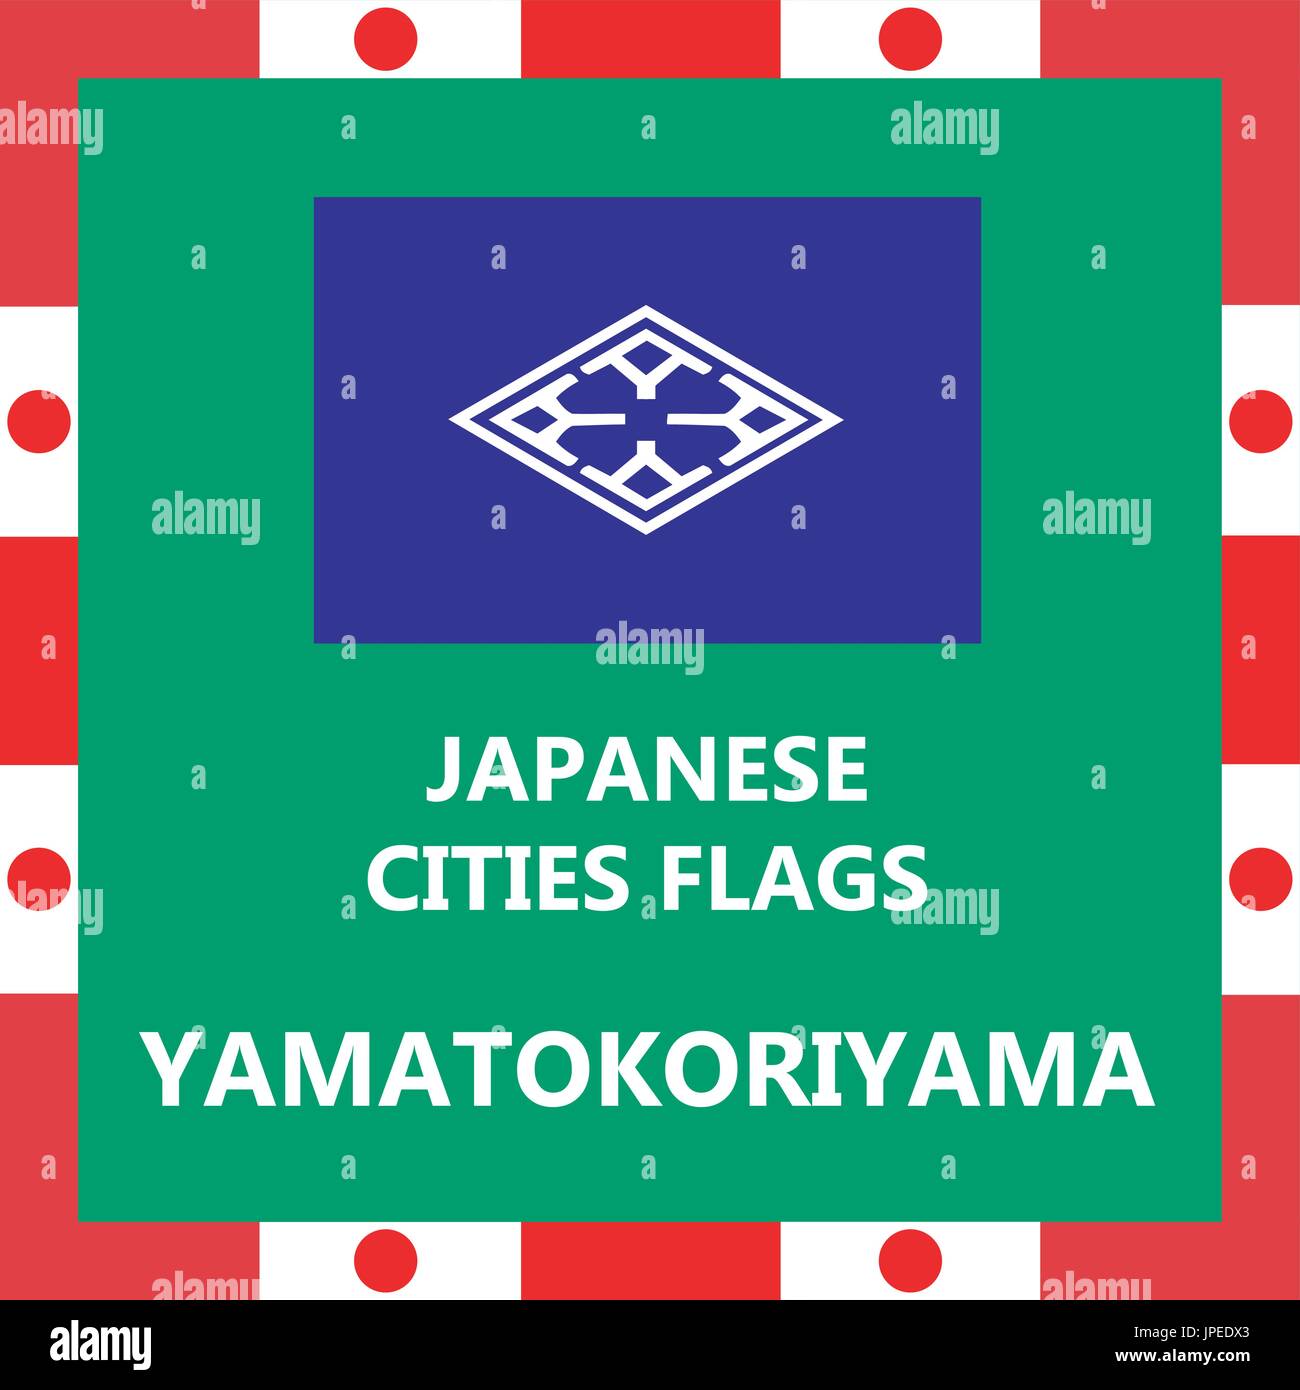 Pavillon de ville japonaise Yamatokoriyama Illustration de Vecteur